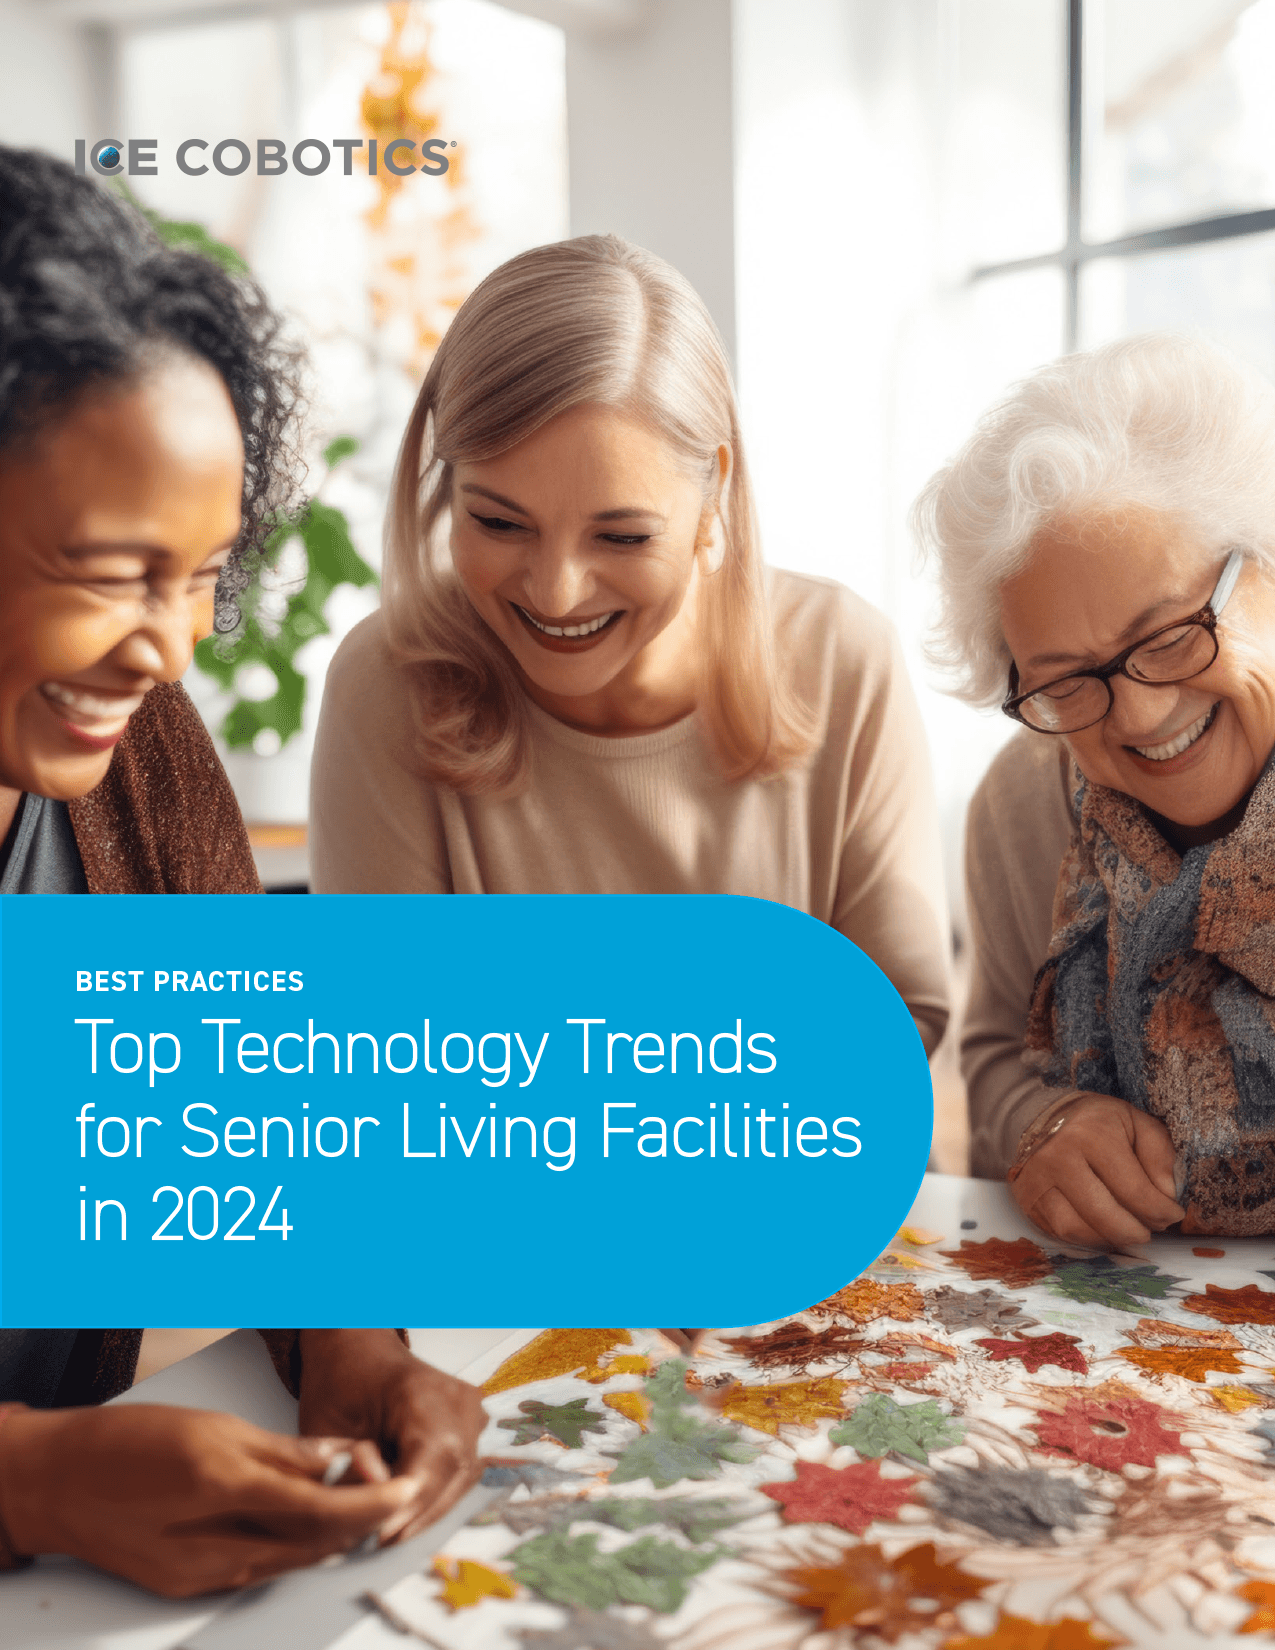 Top Technology Trends for Senior Living Communities